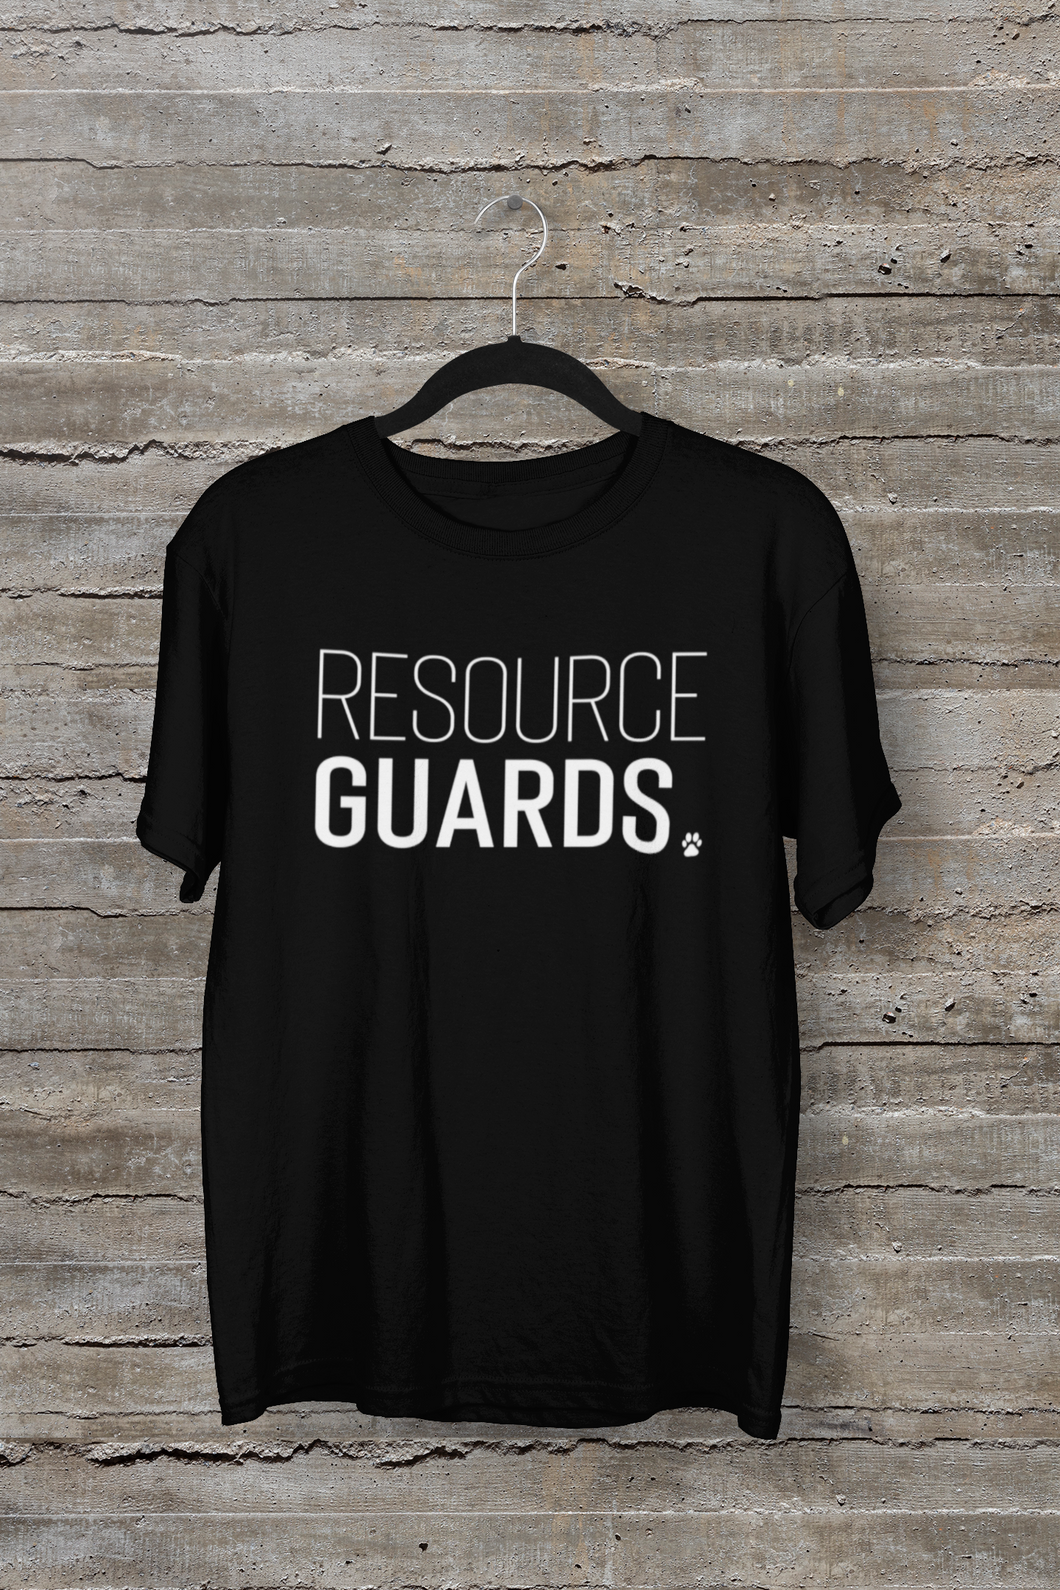 Resource Guards Men's/Unisex or Women's T-shirt